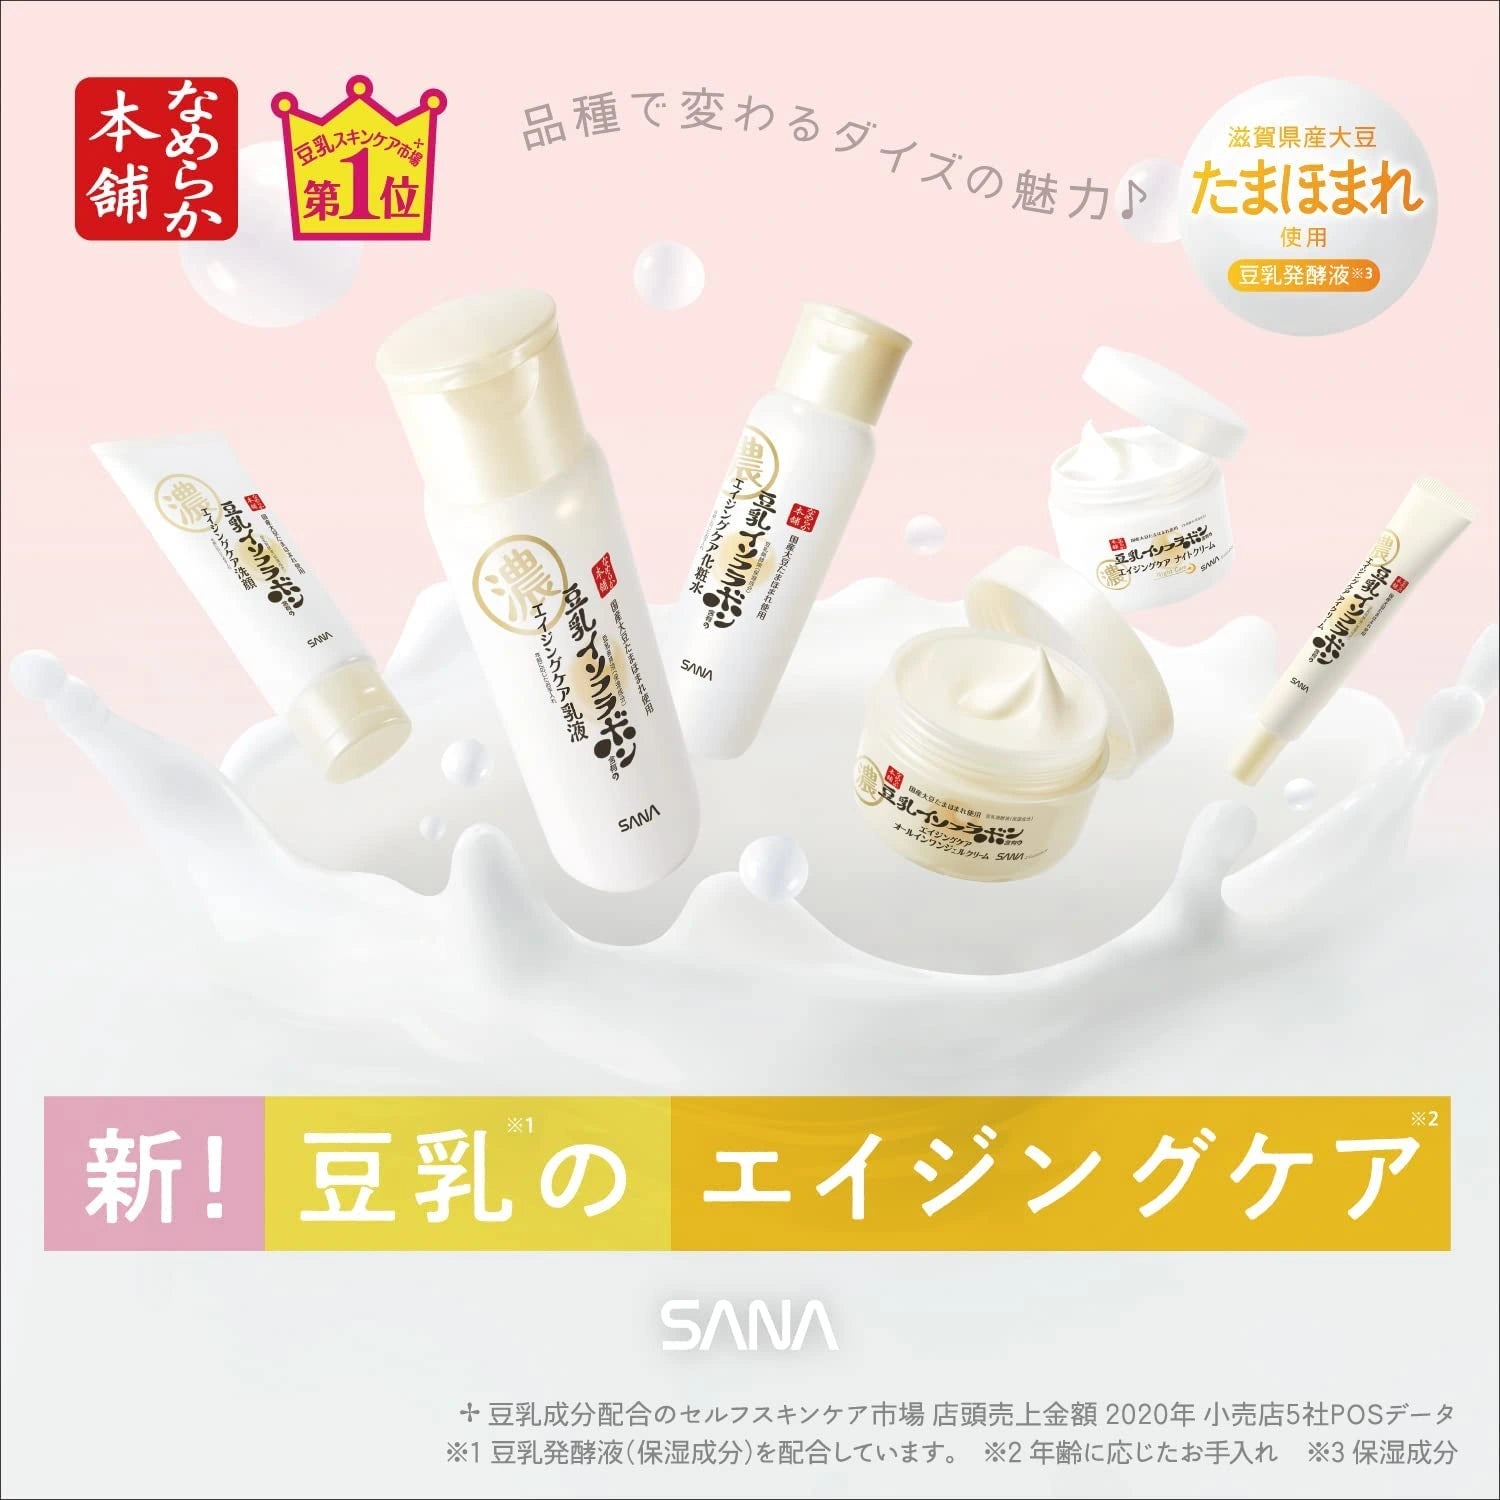 Sana Soy Isoflavones Retinol Facial Lotion 200ml - Buy Me Japan